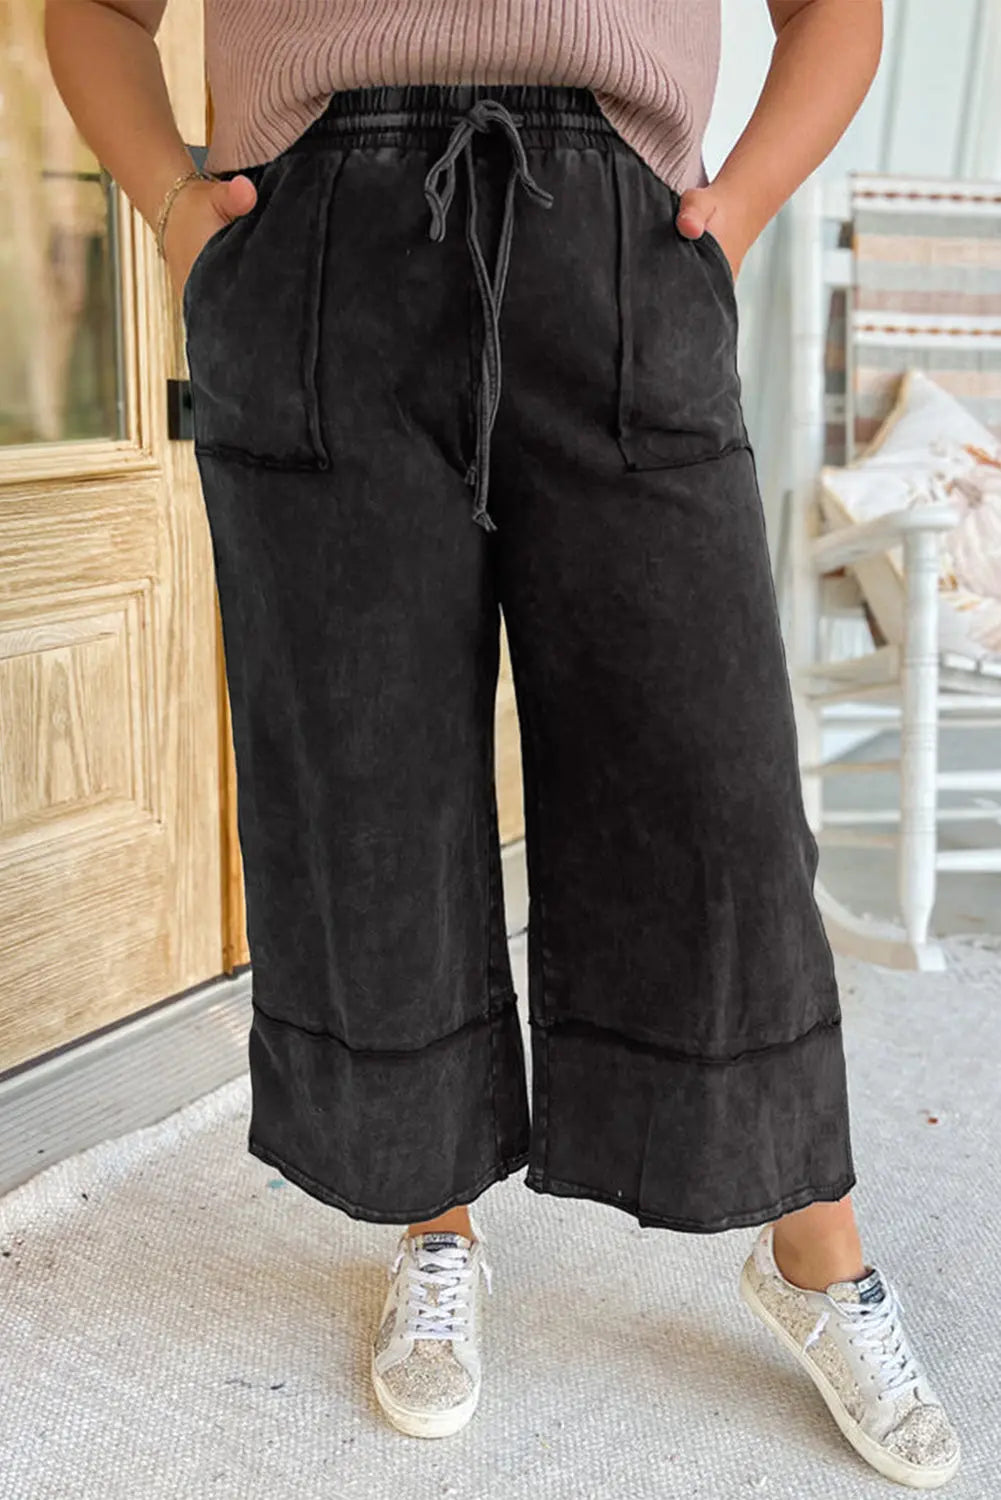 Pantalon taille plus Noir La Mode XL